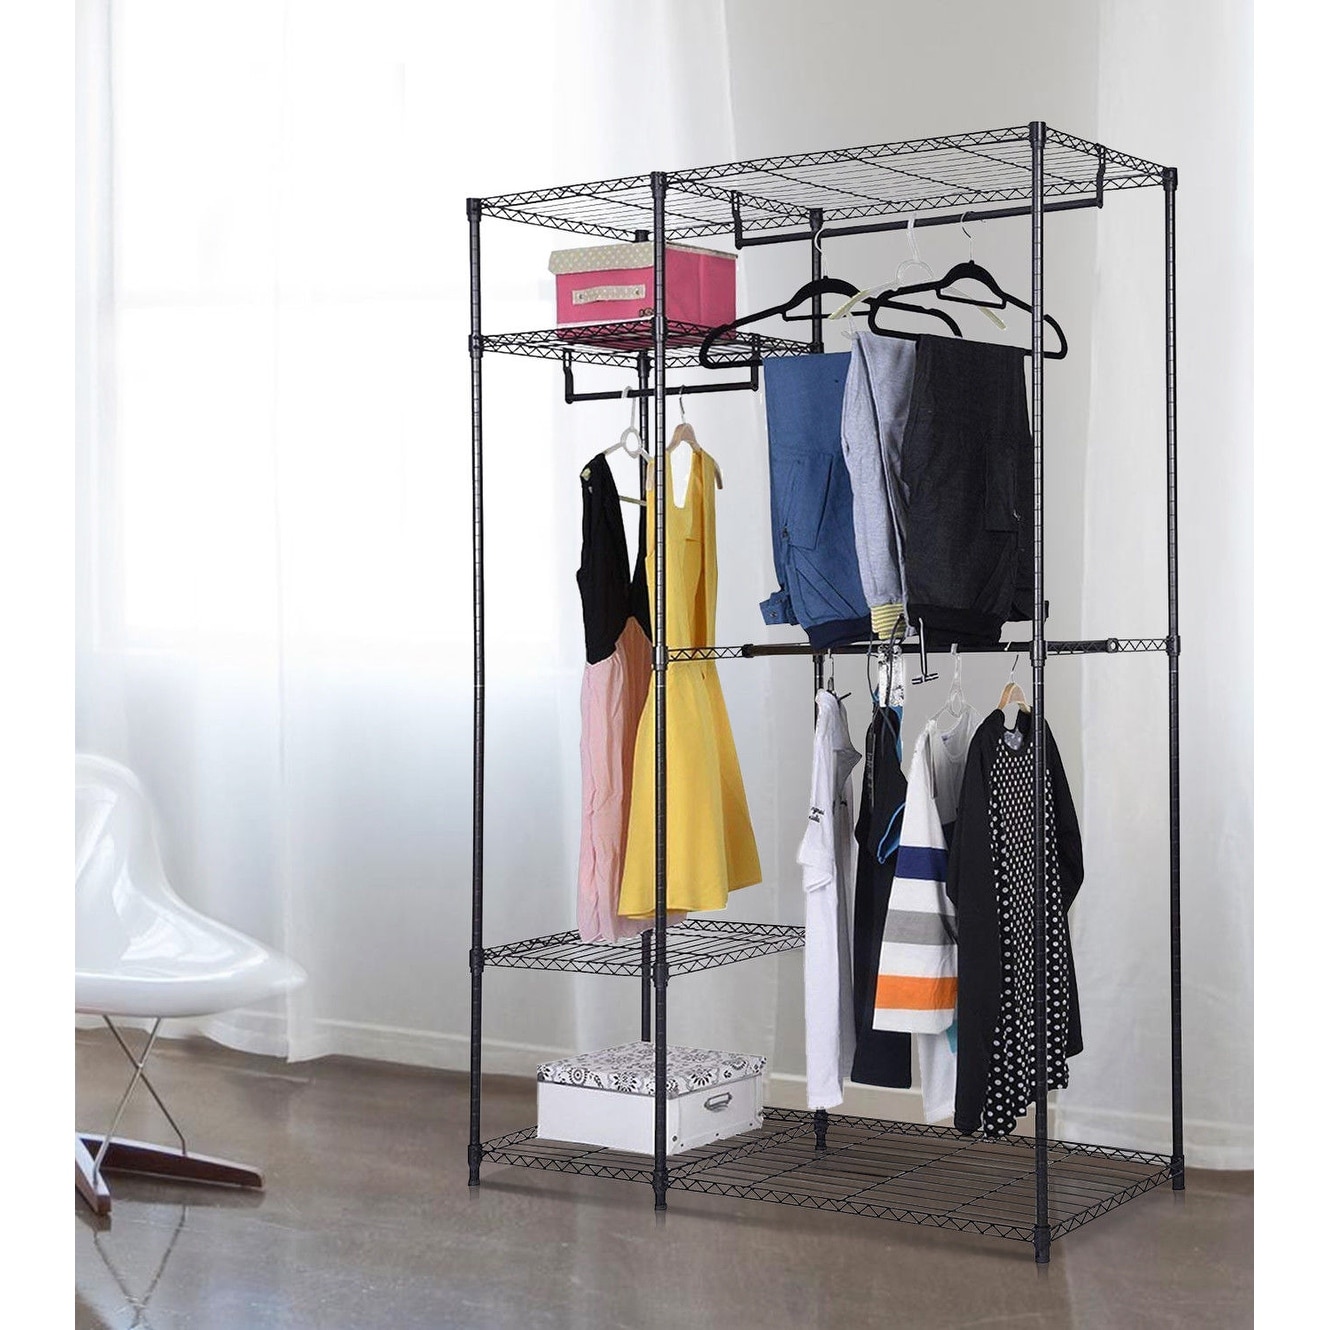 https://ak1.ostkcdn.com/images/products/is/images/direct/b7853da45810817e6b91153c32e85c34c63e4c2d/Costway-48%27%27x18%27%27x71%27%27-Closet-Organizer-Garment-Rack-Portable-Clothes-Hanger-Home-Shelf.jpg